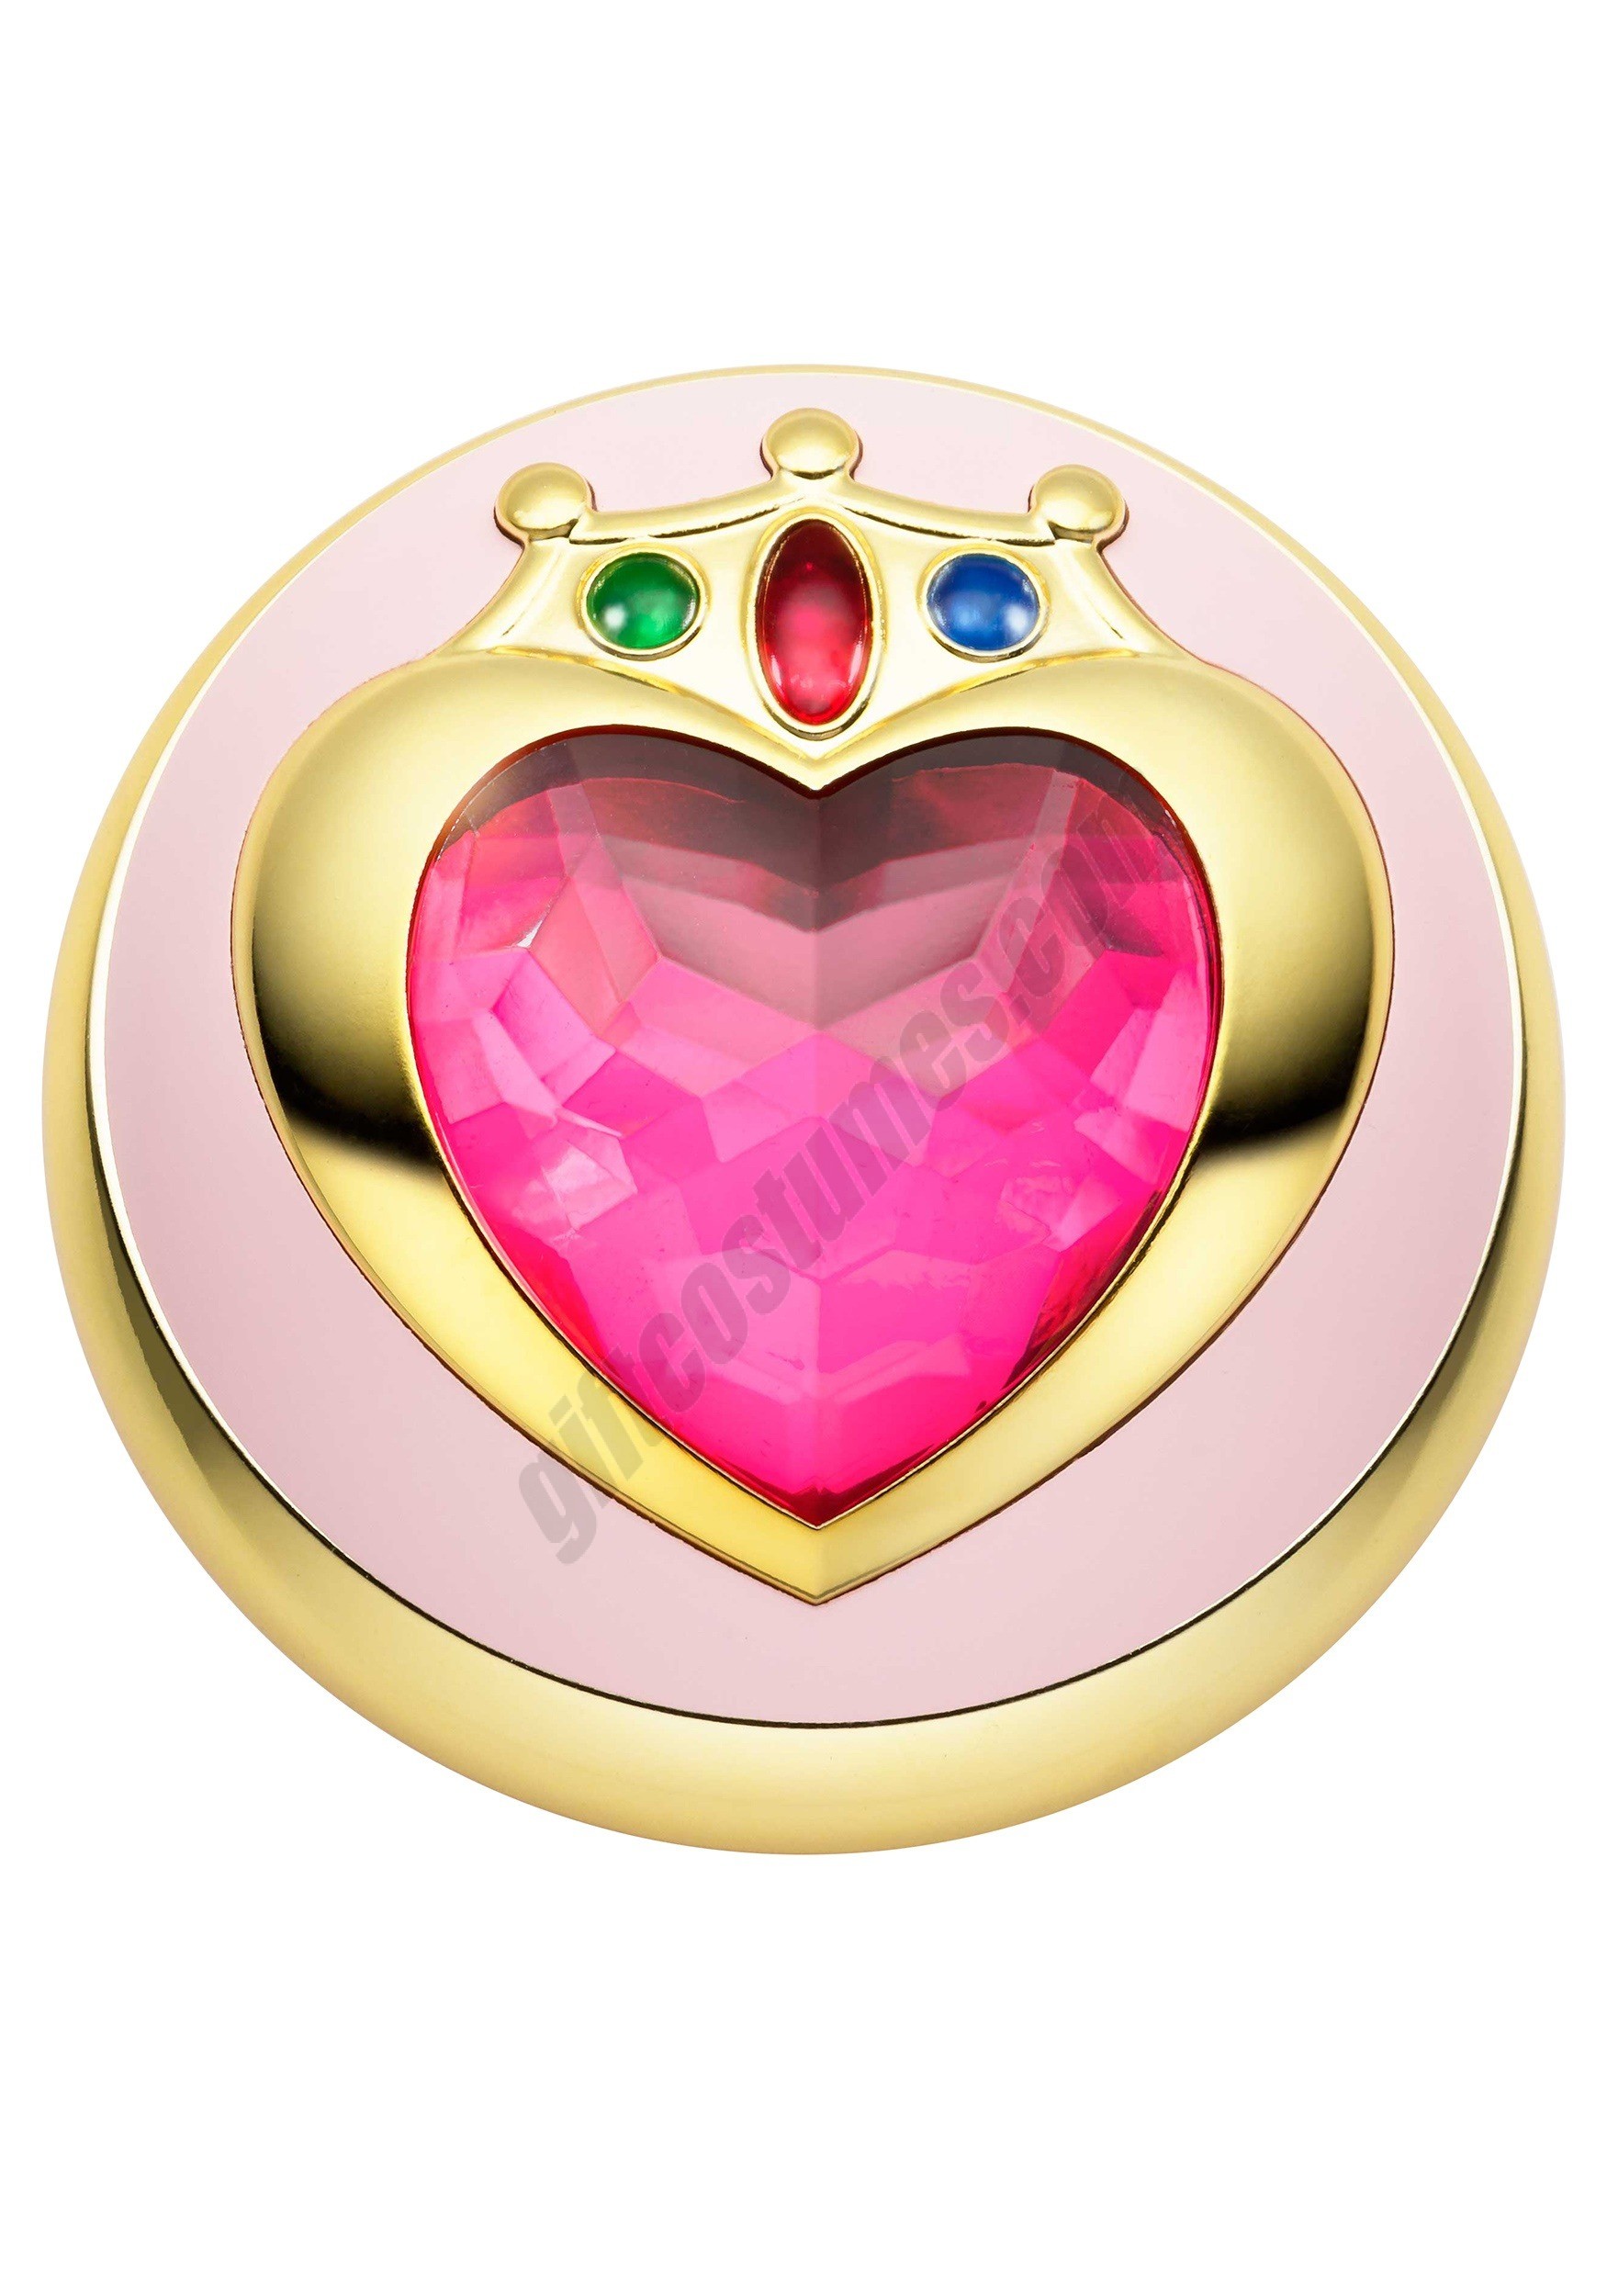 Bandai Proplica Sailor Chibi Moon Prism Heart Compact  Promotions - Bandai Proplica Sailor Chibi Moon Prism Heart Compact  Promotions